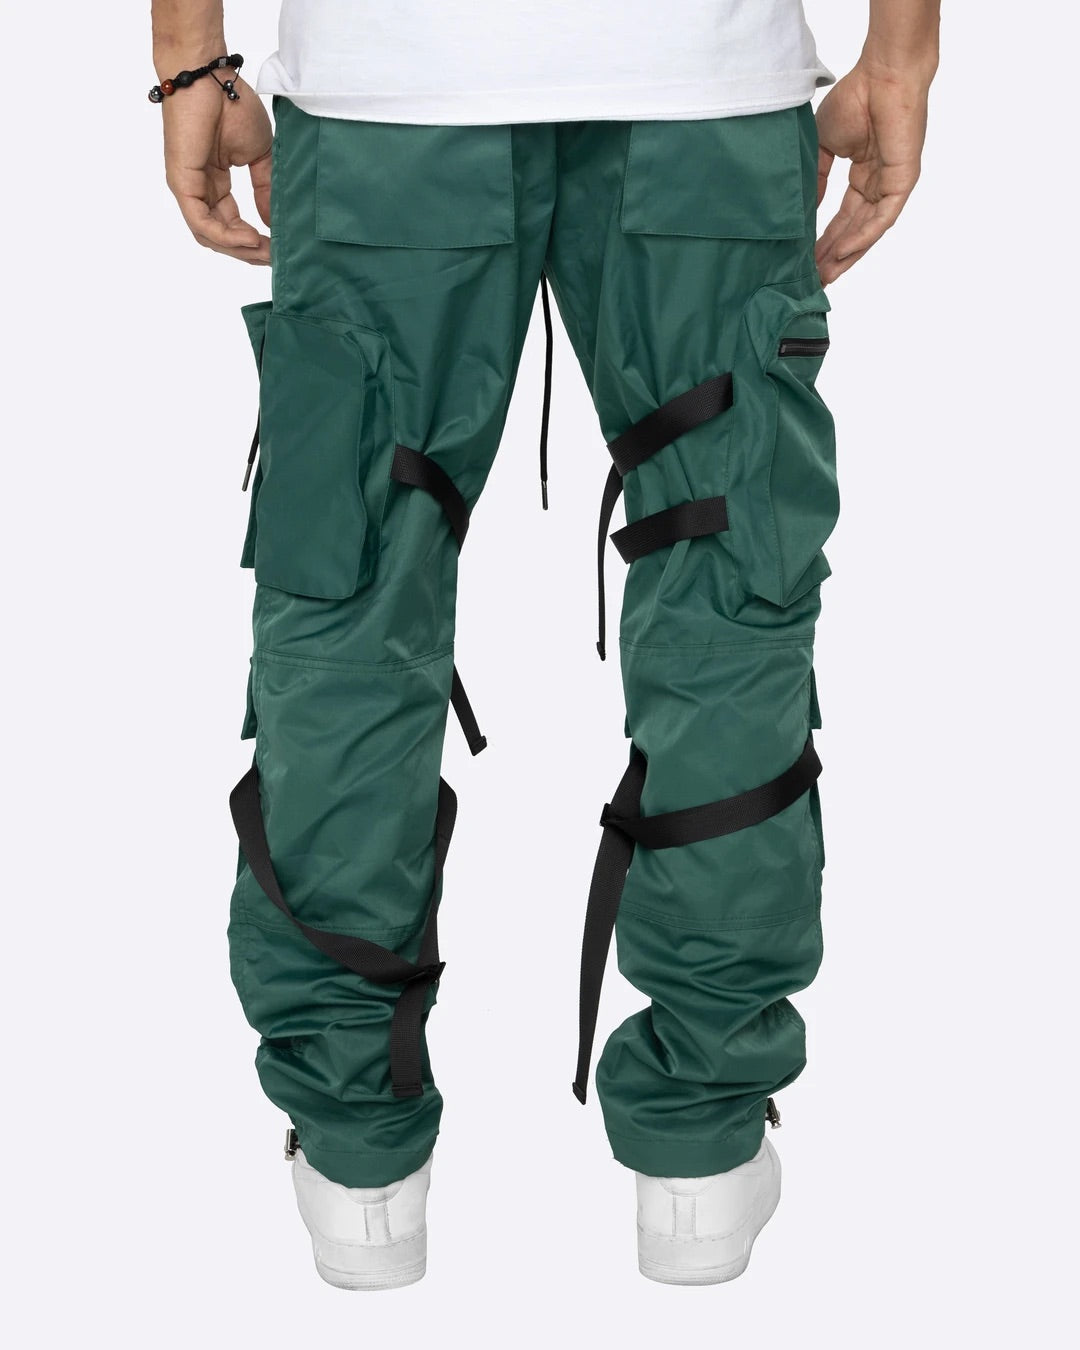 mens eptm teal green strap cargo pants - 8586